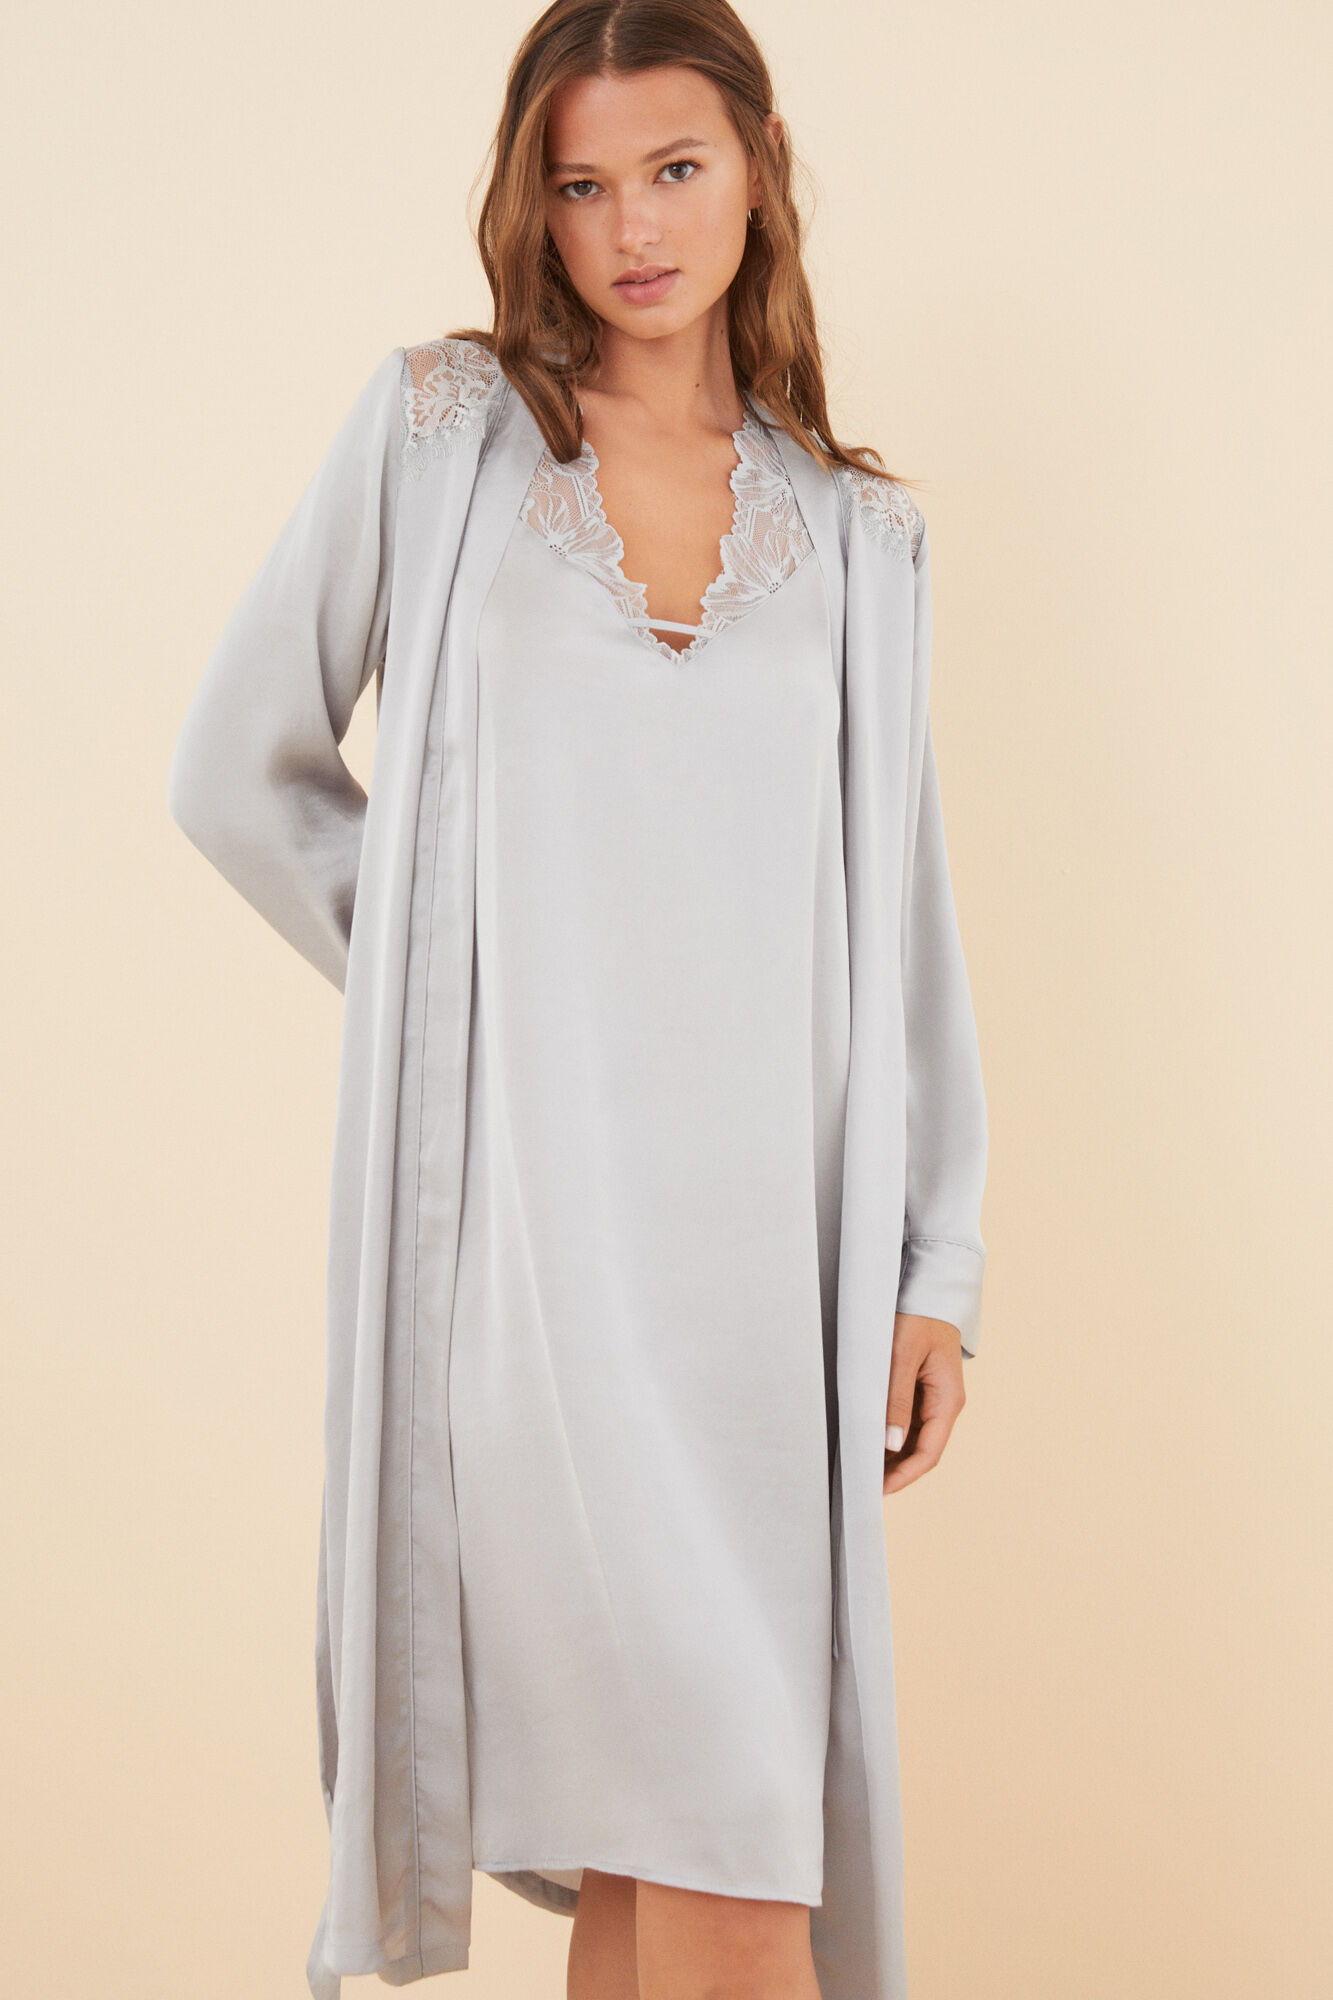 Premium AI Image | Hyper Realistic Hd Silver Dress Pajamas Super Detailed  Isolated Design